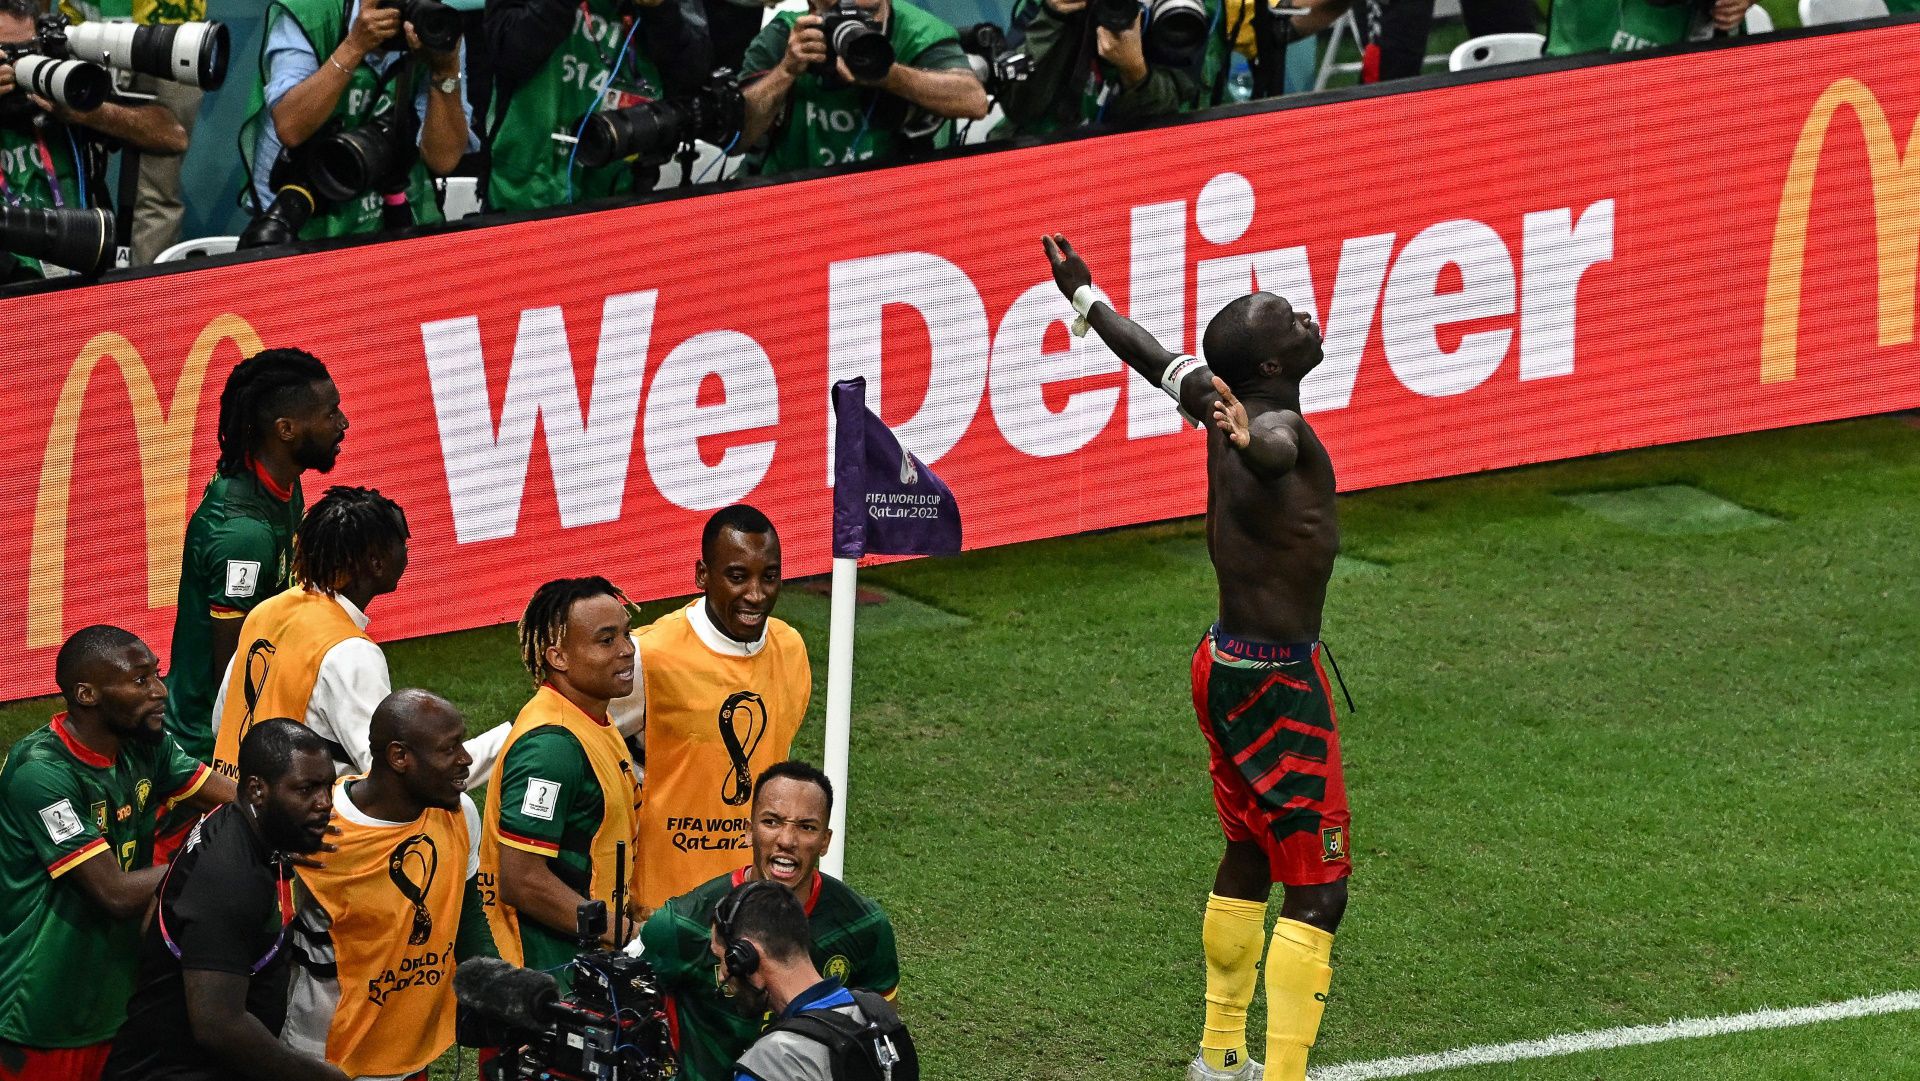 Cameroon striker Vincent Aboubakar was a standout performer at the World Cup